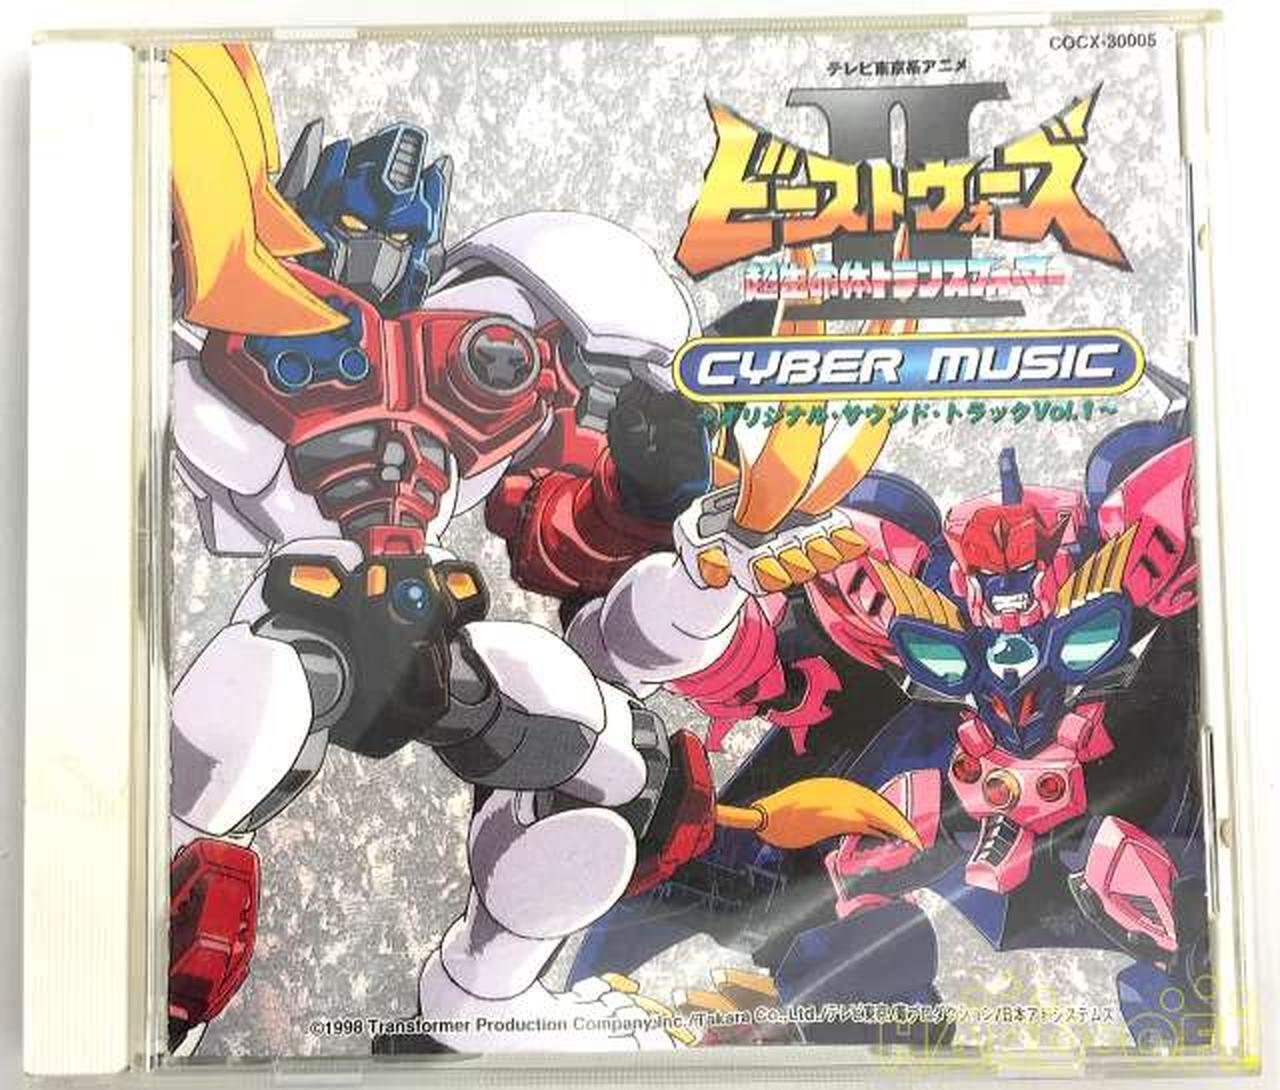 Nippon Columbia Beast Wars Iicyber Music Cd